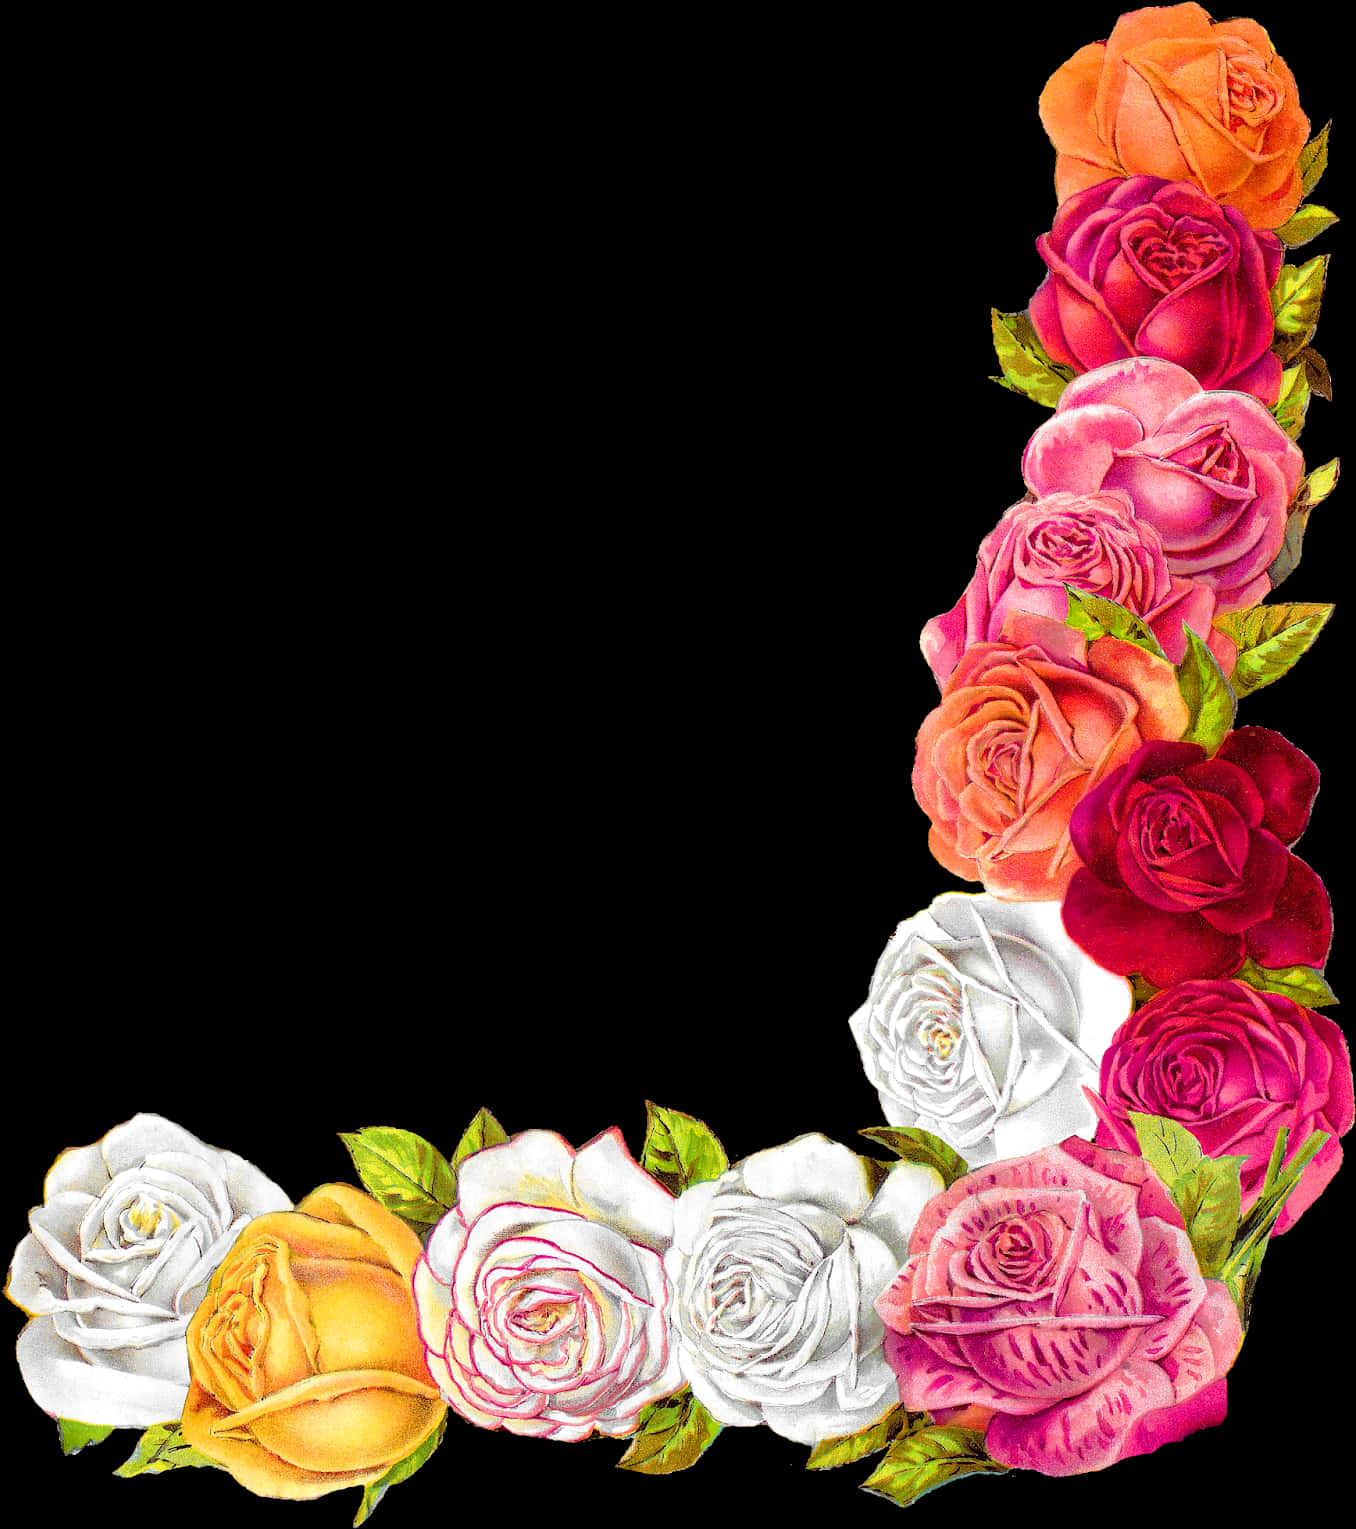 Colorful Rose Border Design